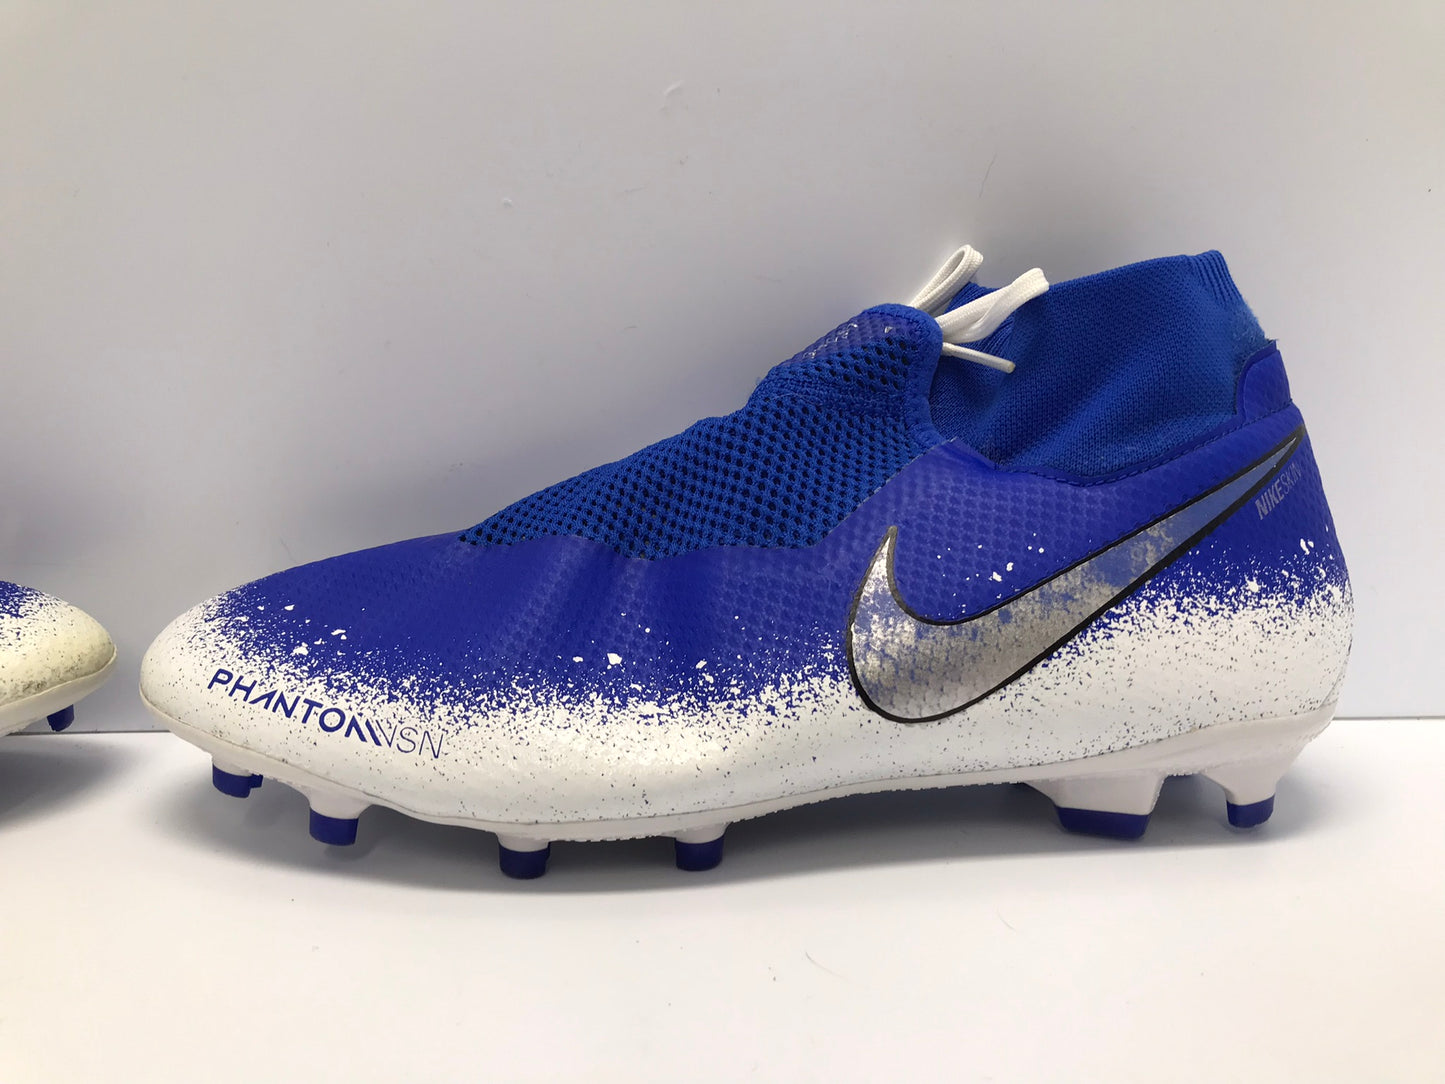 Soccer Shoes Cleats Men's Size 11 Nike Phantom Elite Blue Silver Grey Excellent